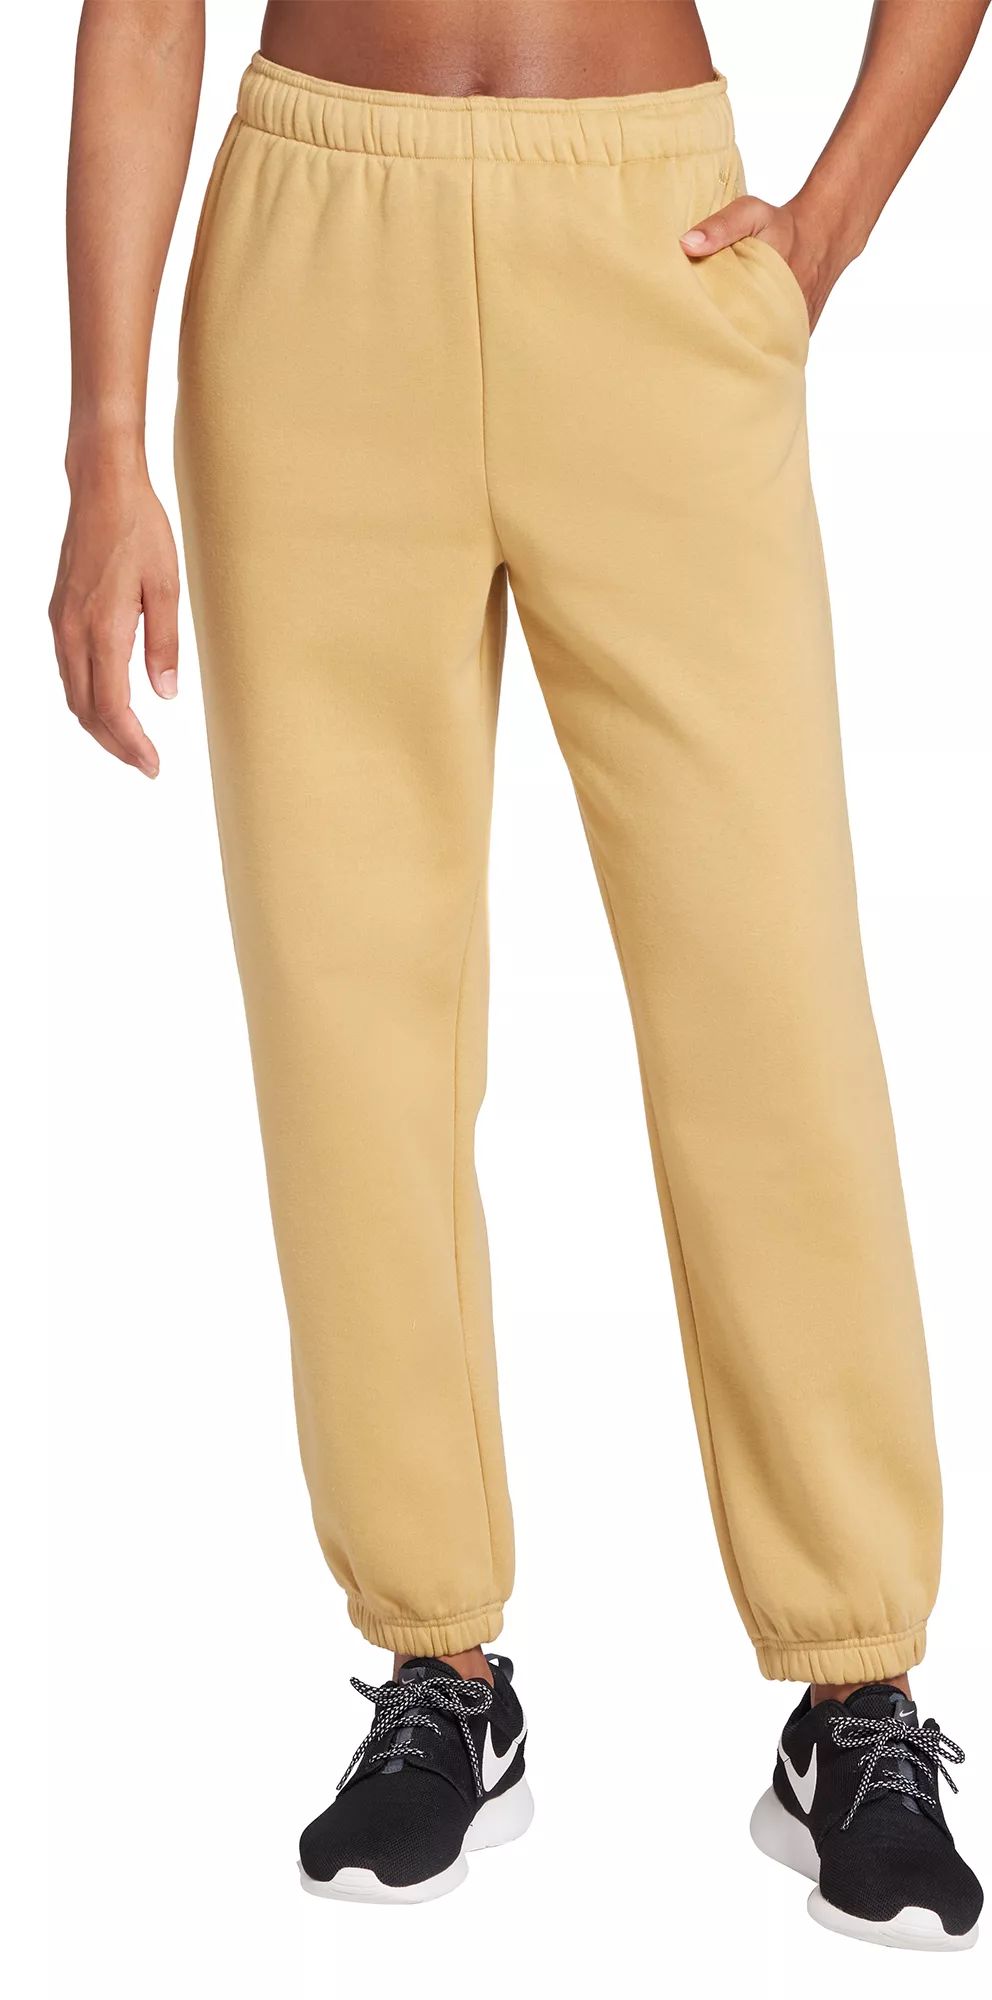 DSG Women's Boyfriend Fleece Cinch Pants, 2X, Urban Yellow | Dick's Sporting Goods